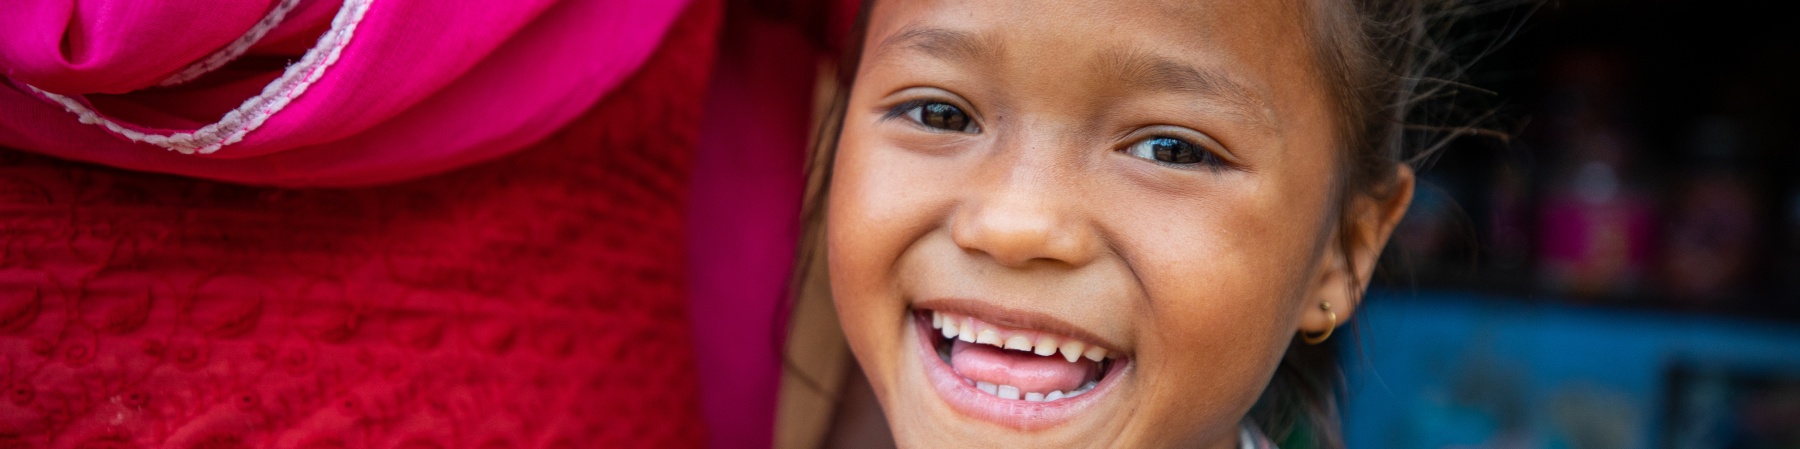 Bambina nepalese sorridente